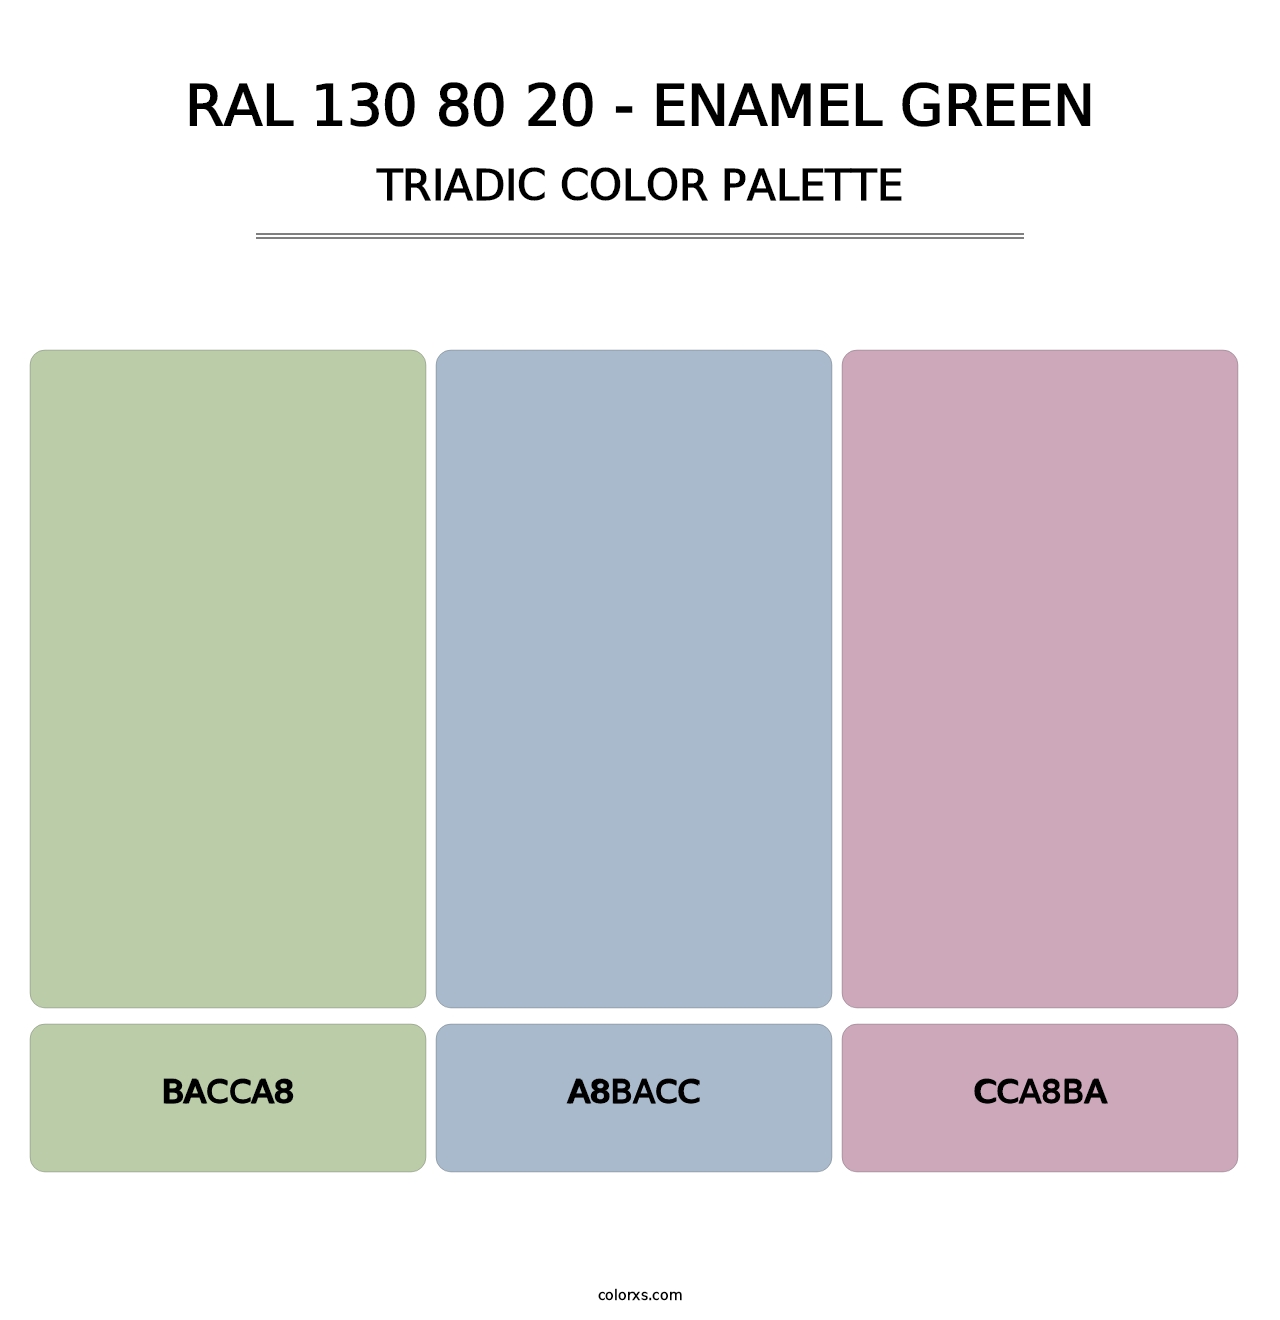 RAL 130 80 20 - Enamel Green - Triadic Color Palette